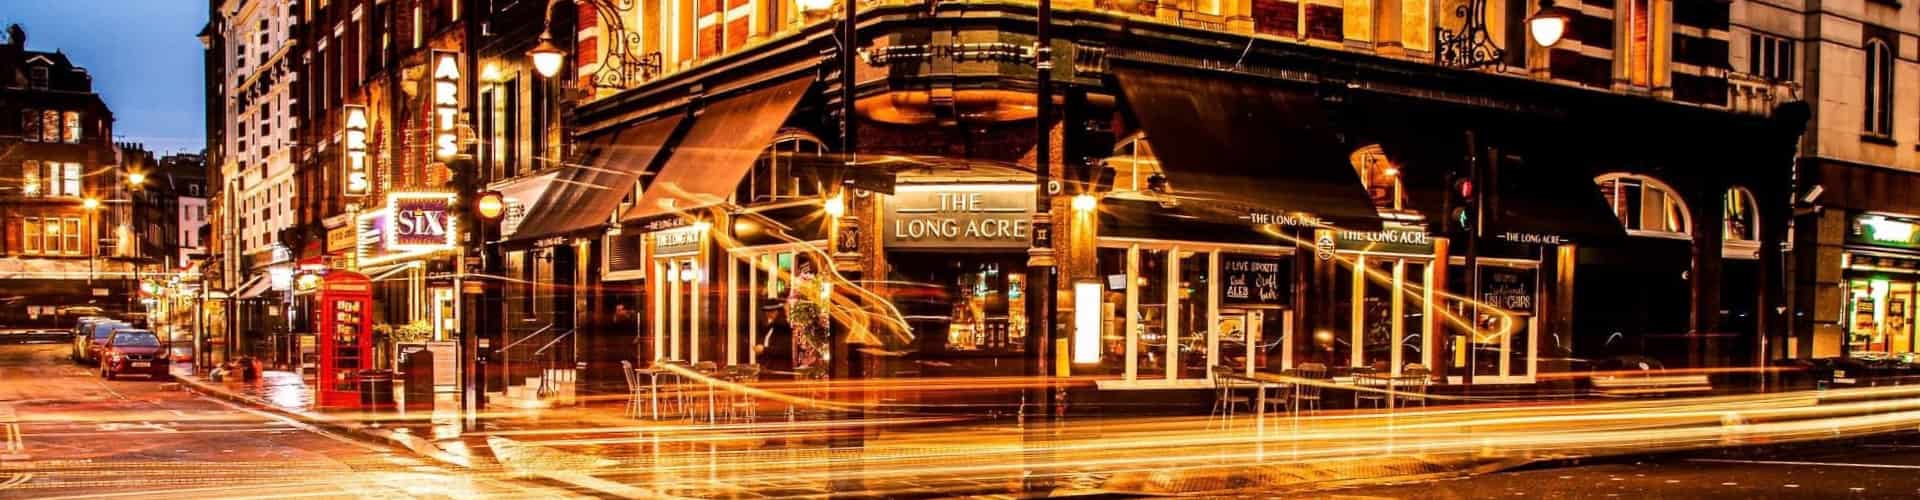 The Long Acre pub in London